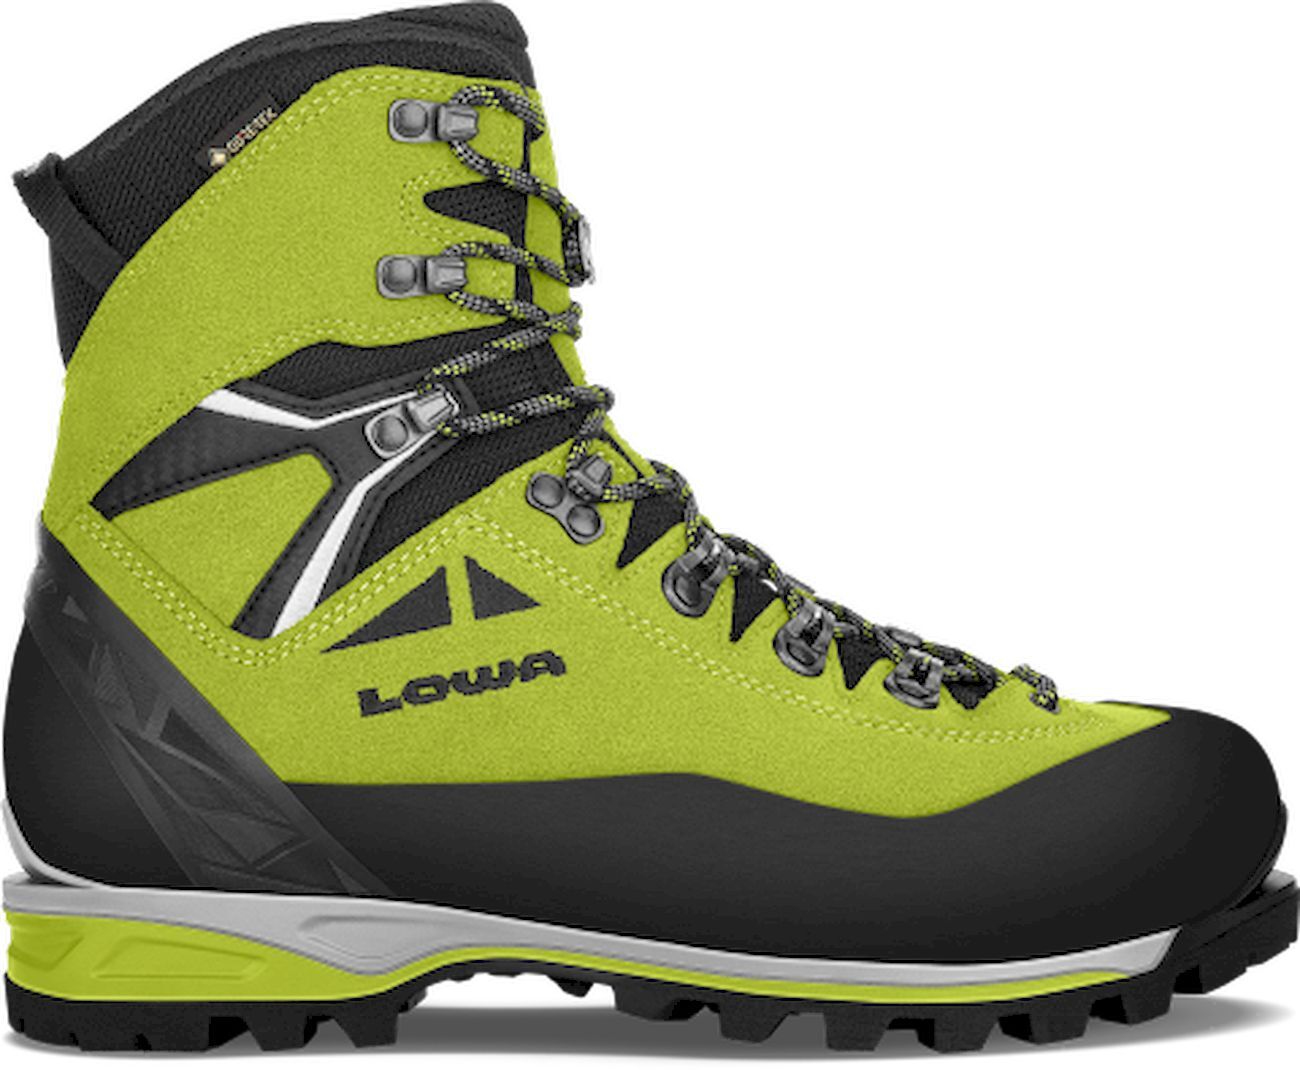 Lowa Alpine Expert ll GTX - Mountaineering boots - Men's